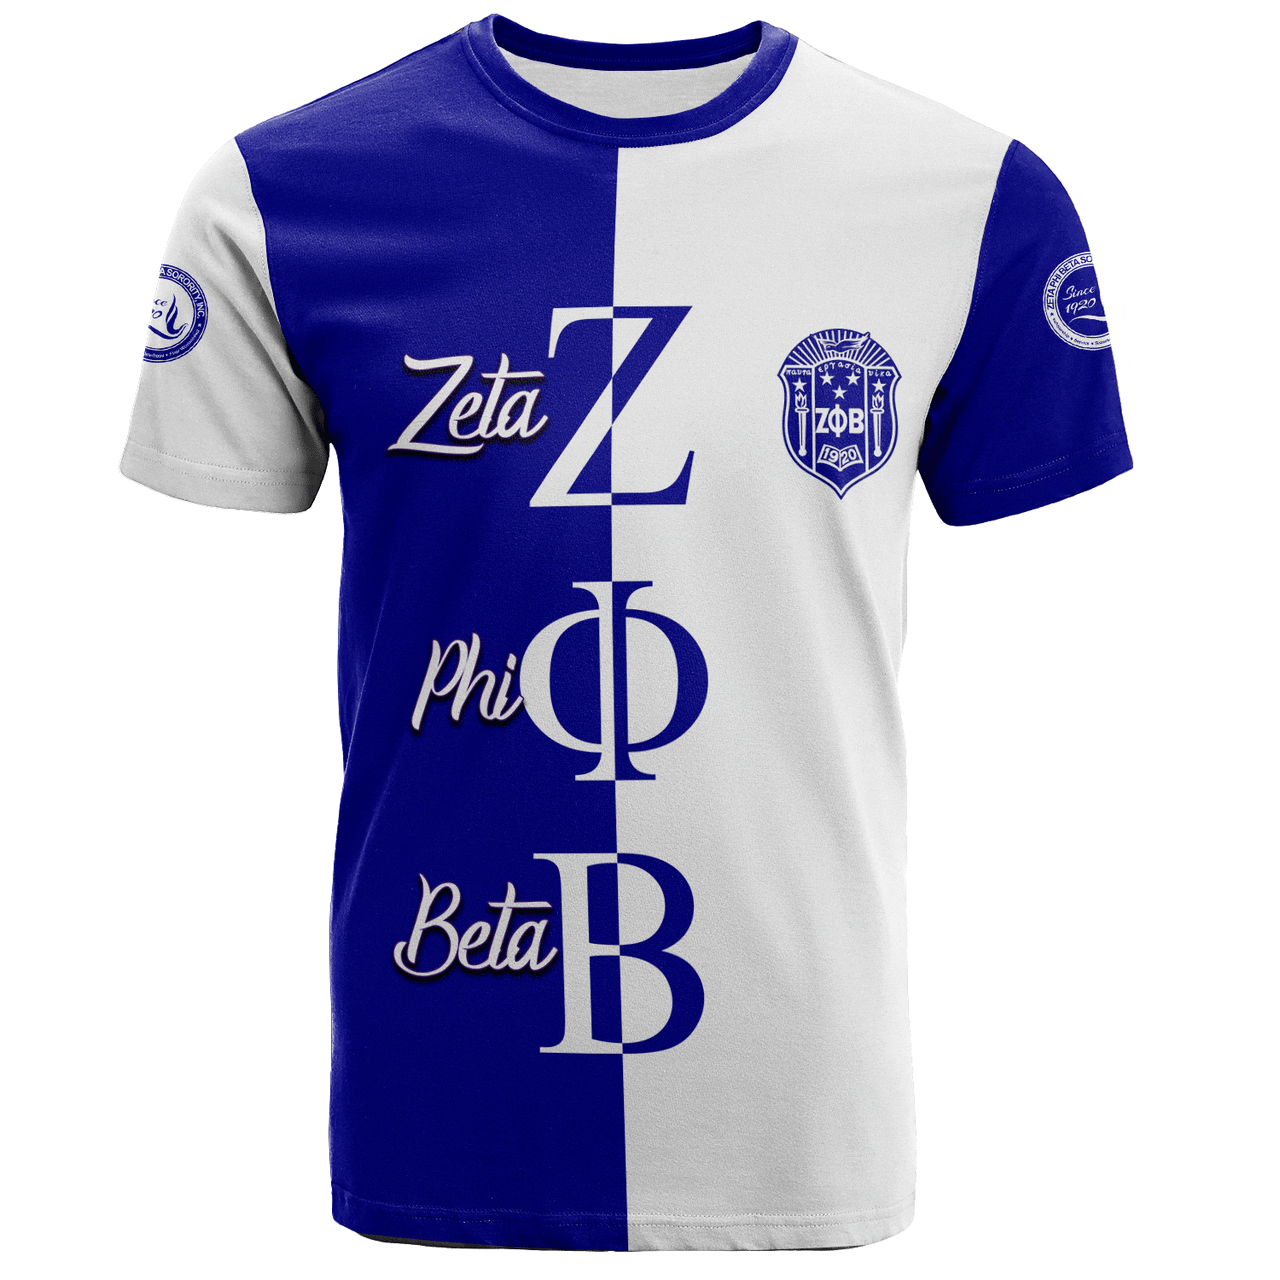 Zeta Phi Beta T-Shirt Half Style